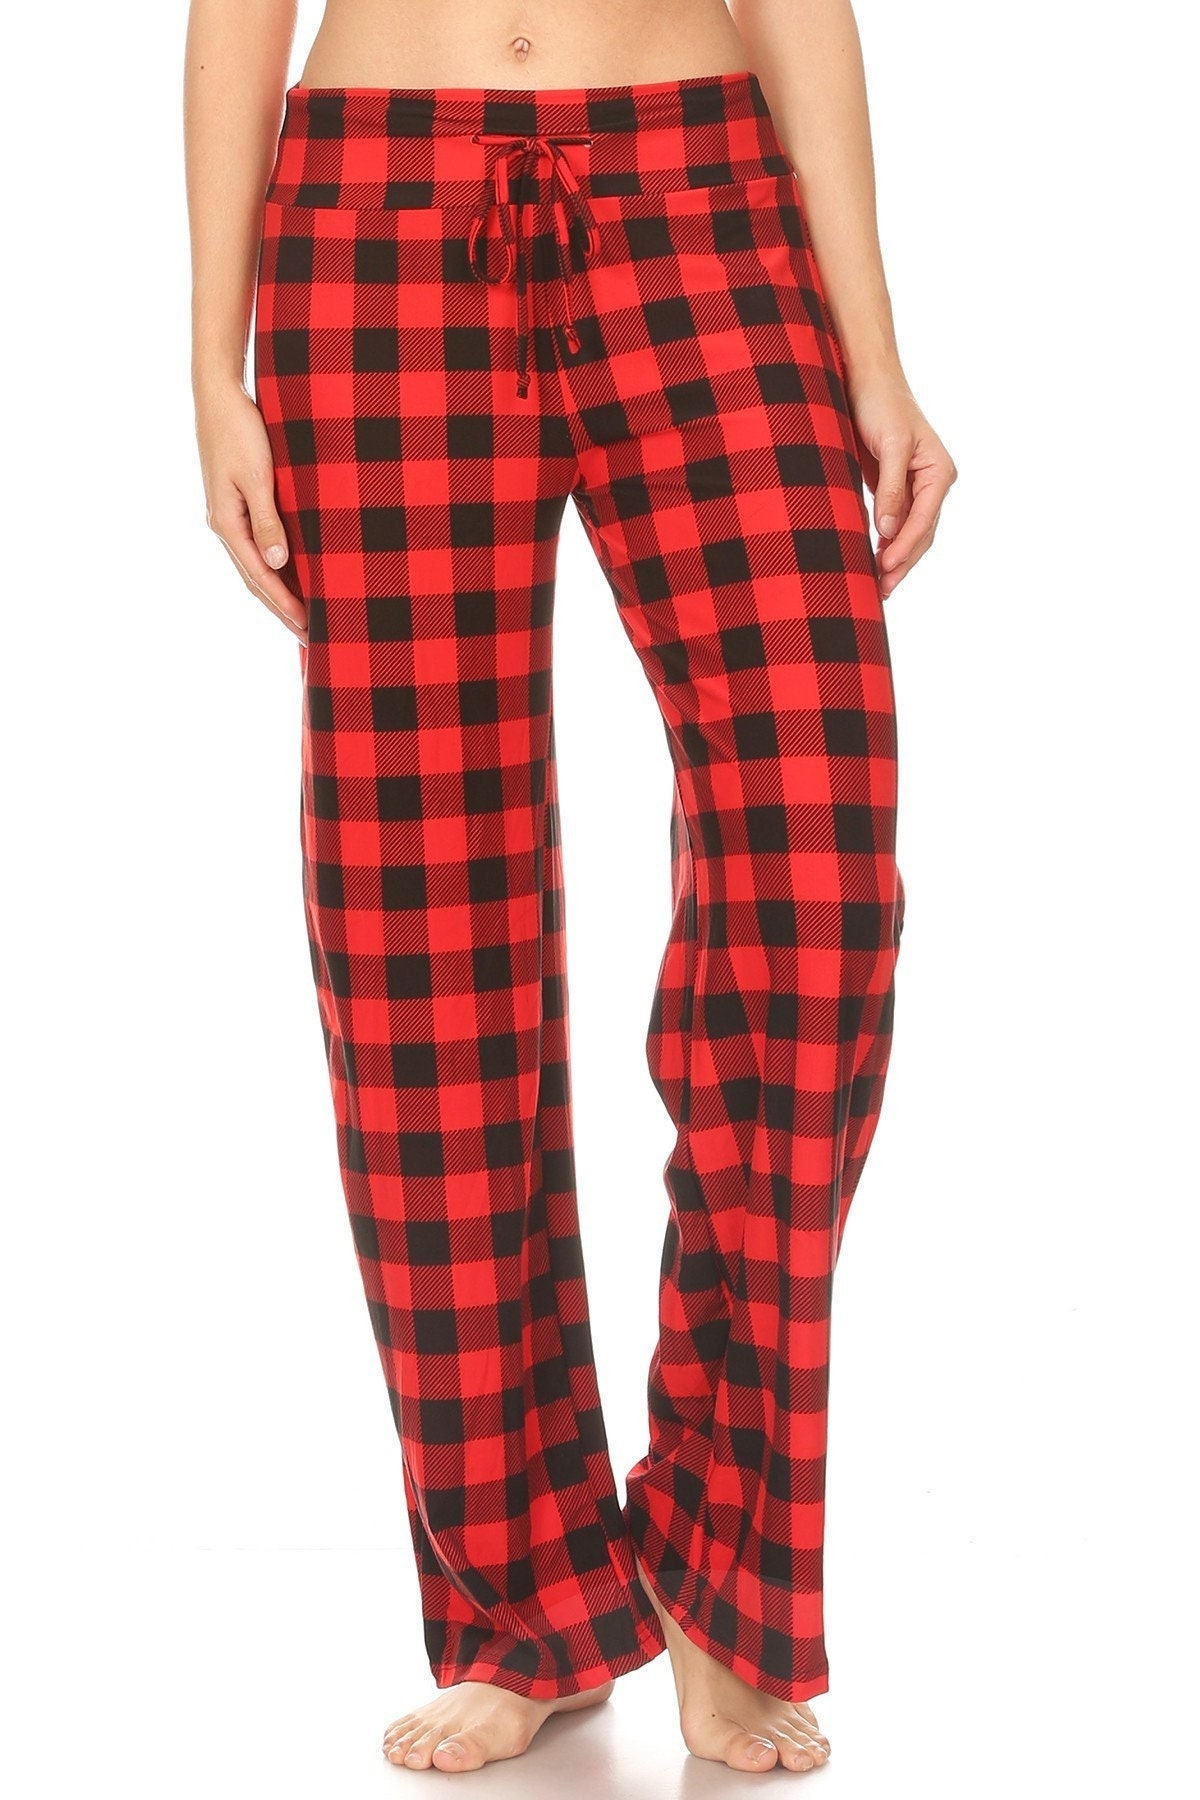 Red Plaid Pajama -  Canada